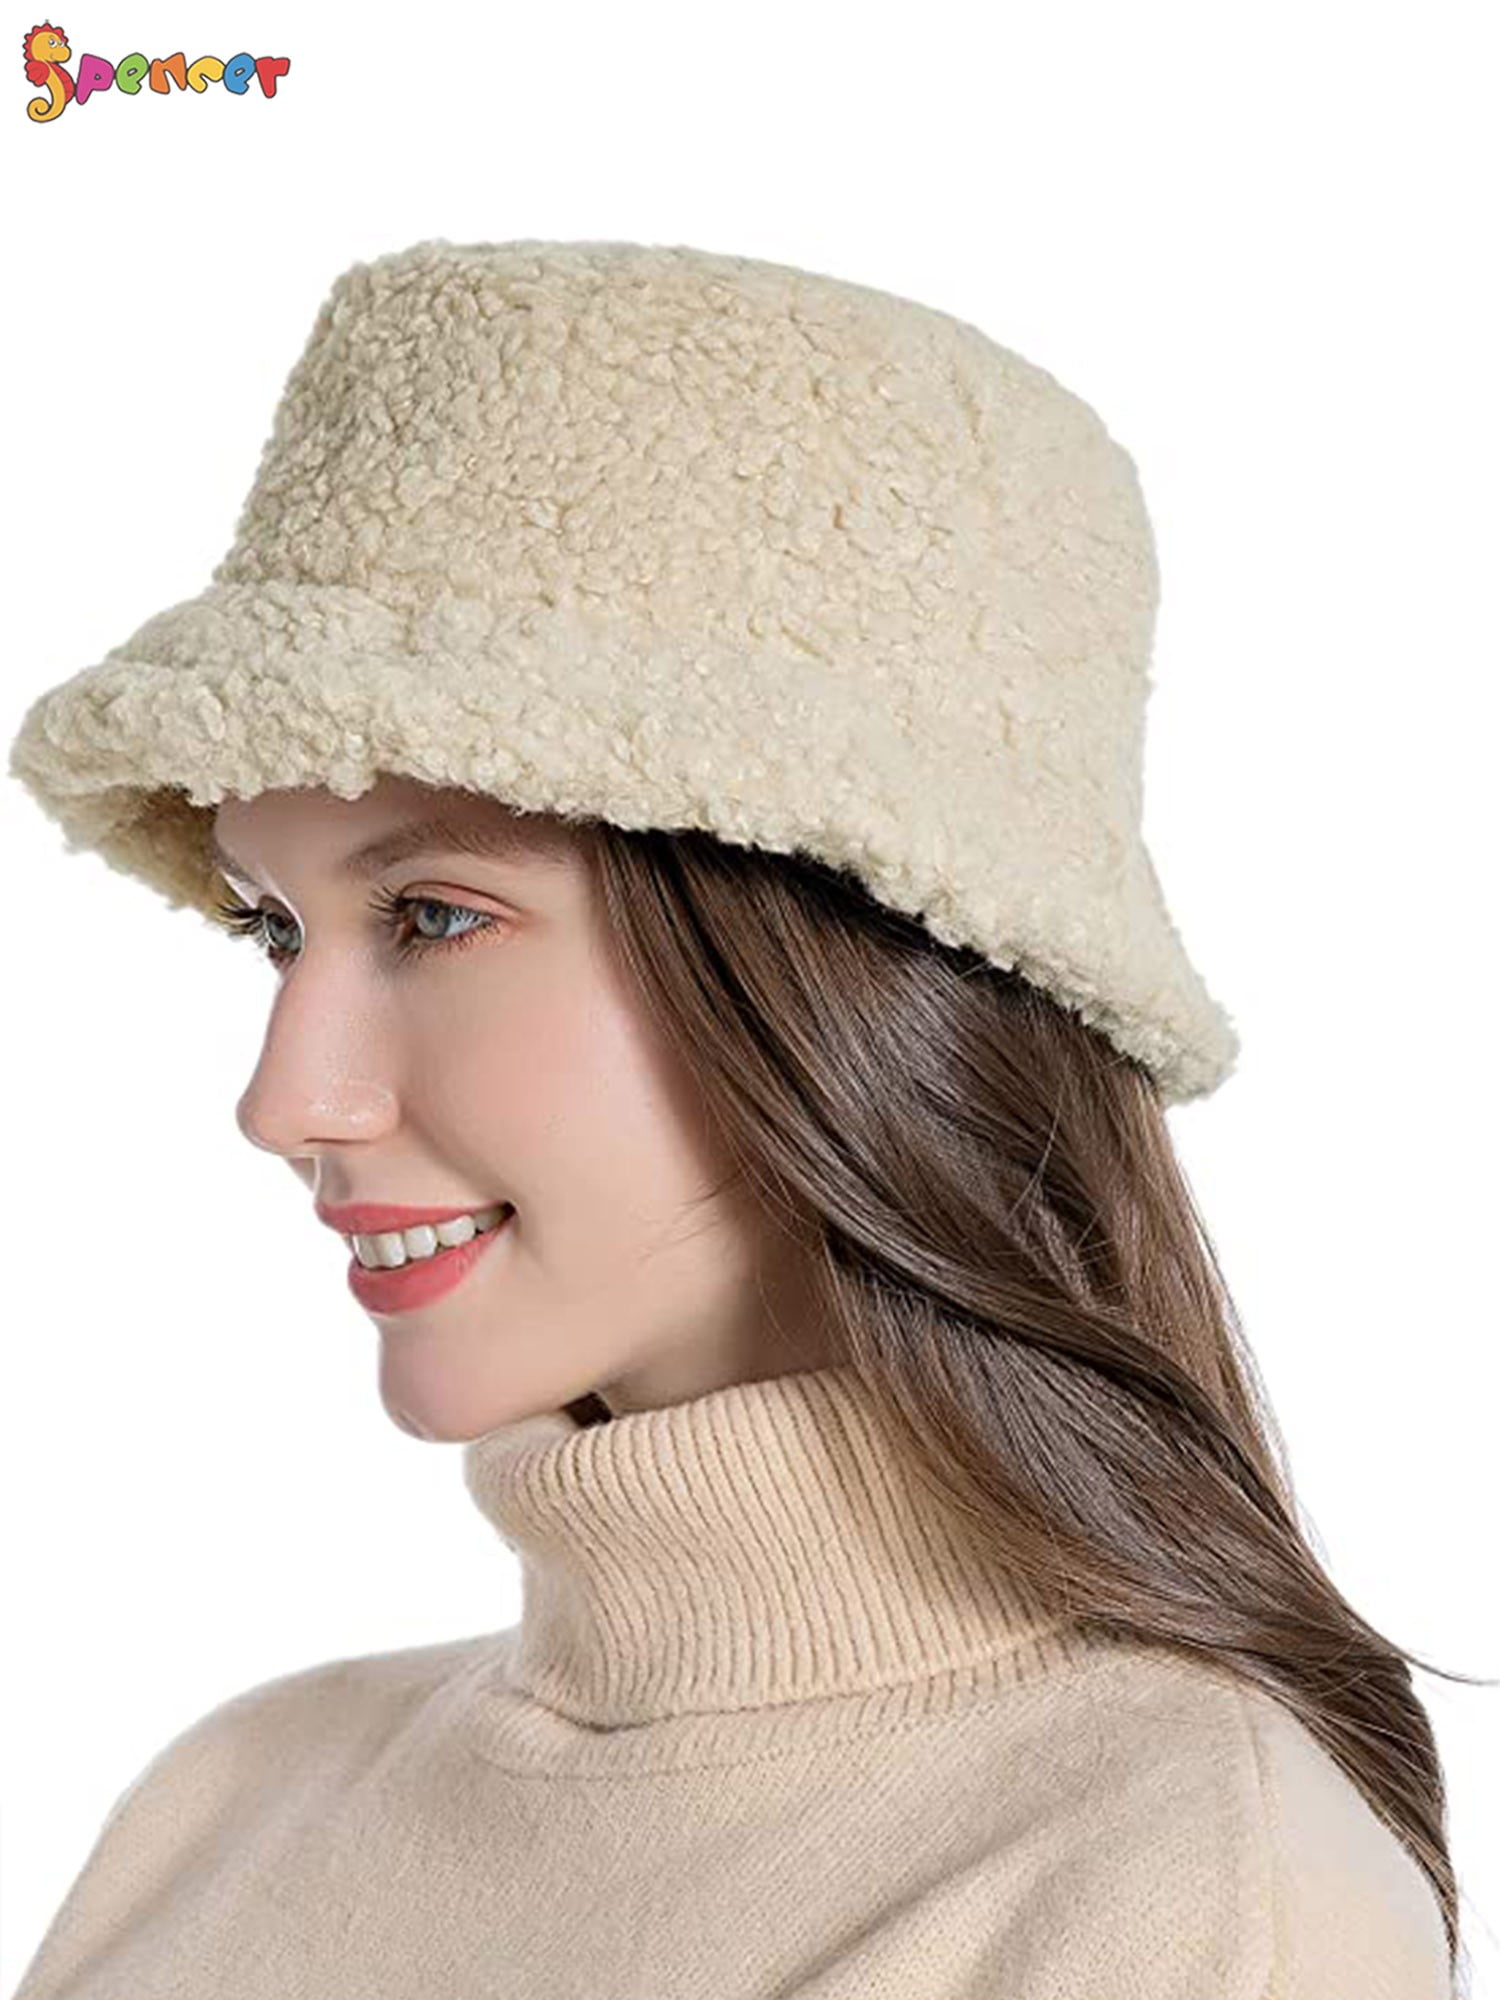 Spencer Winter Bucket Hat for Women Men Warm Cloche Hats Vintage Faux Fur Fisherman Cap - Walmart.com